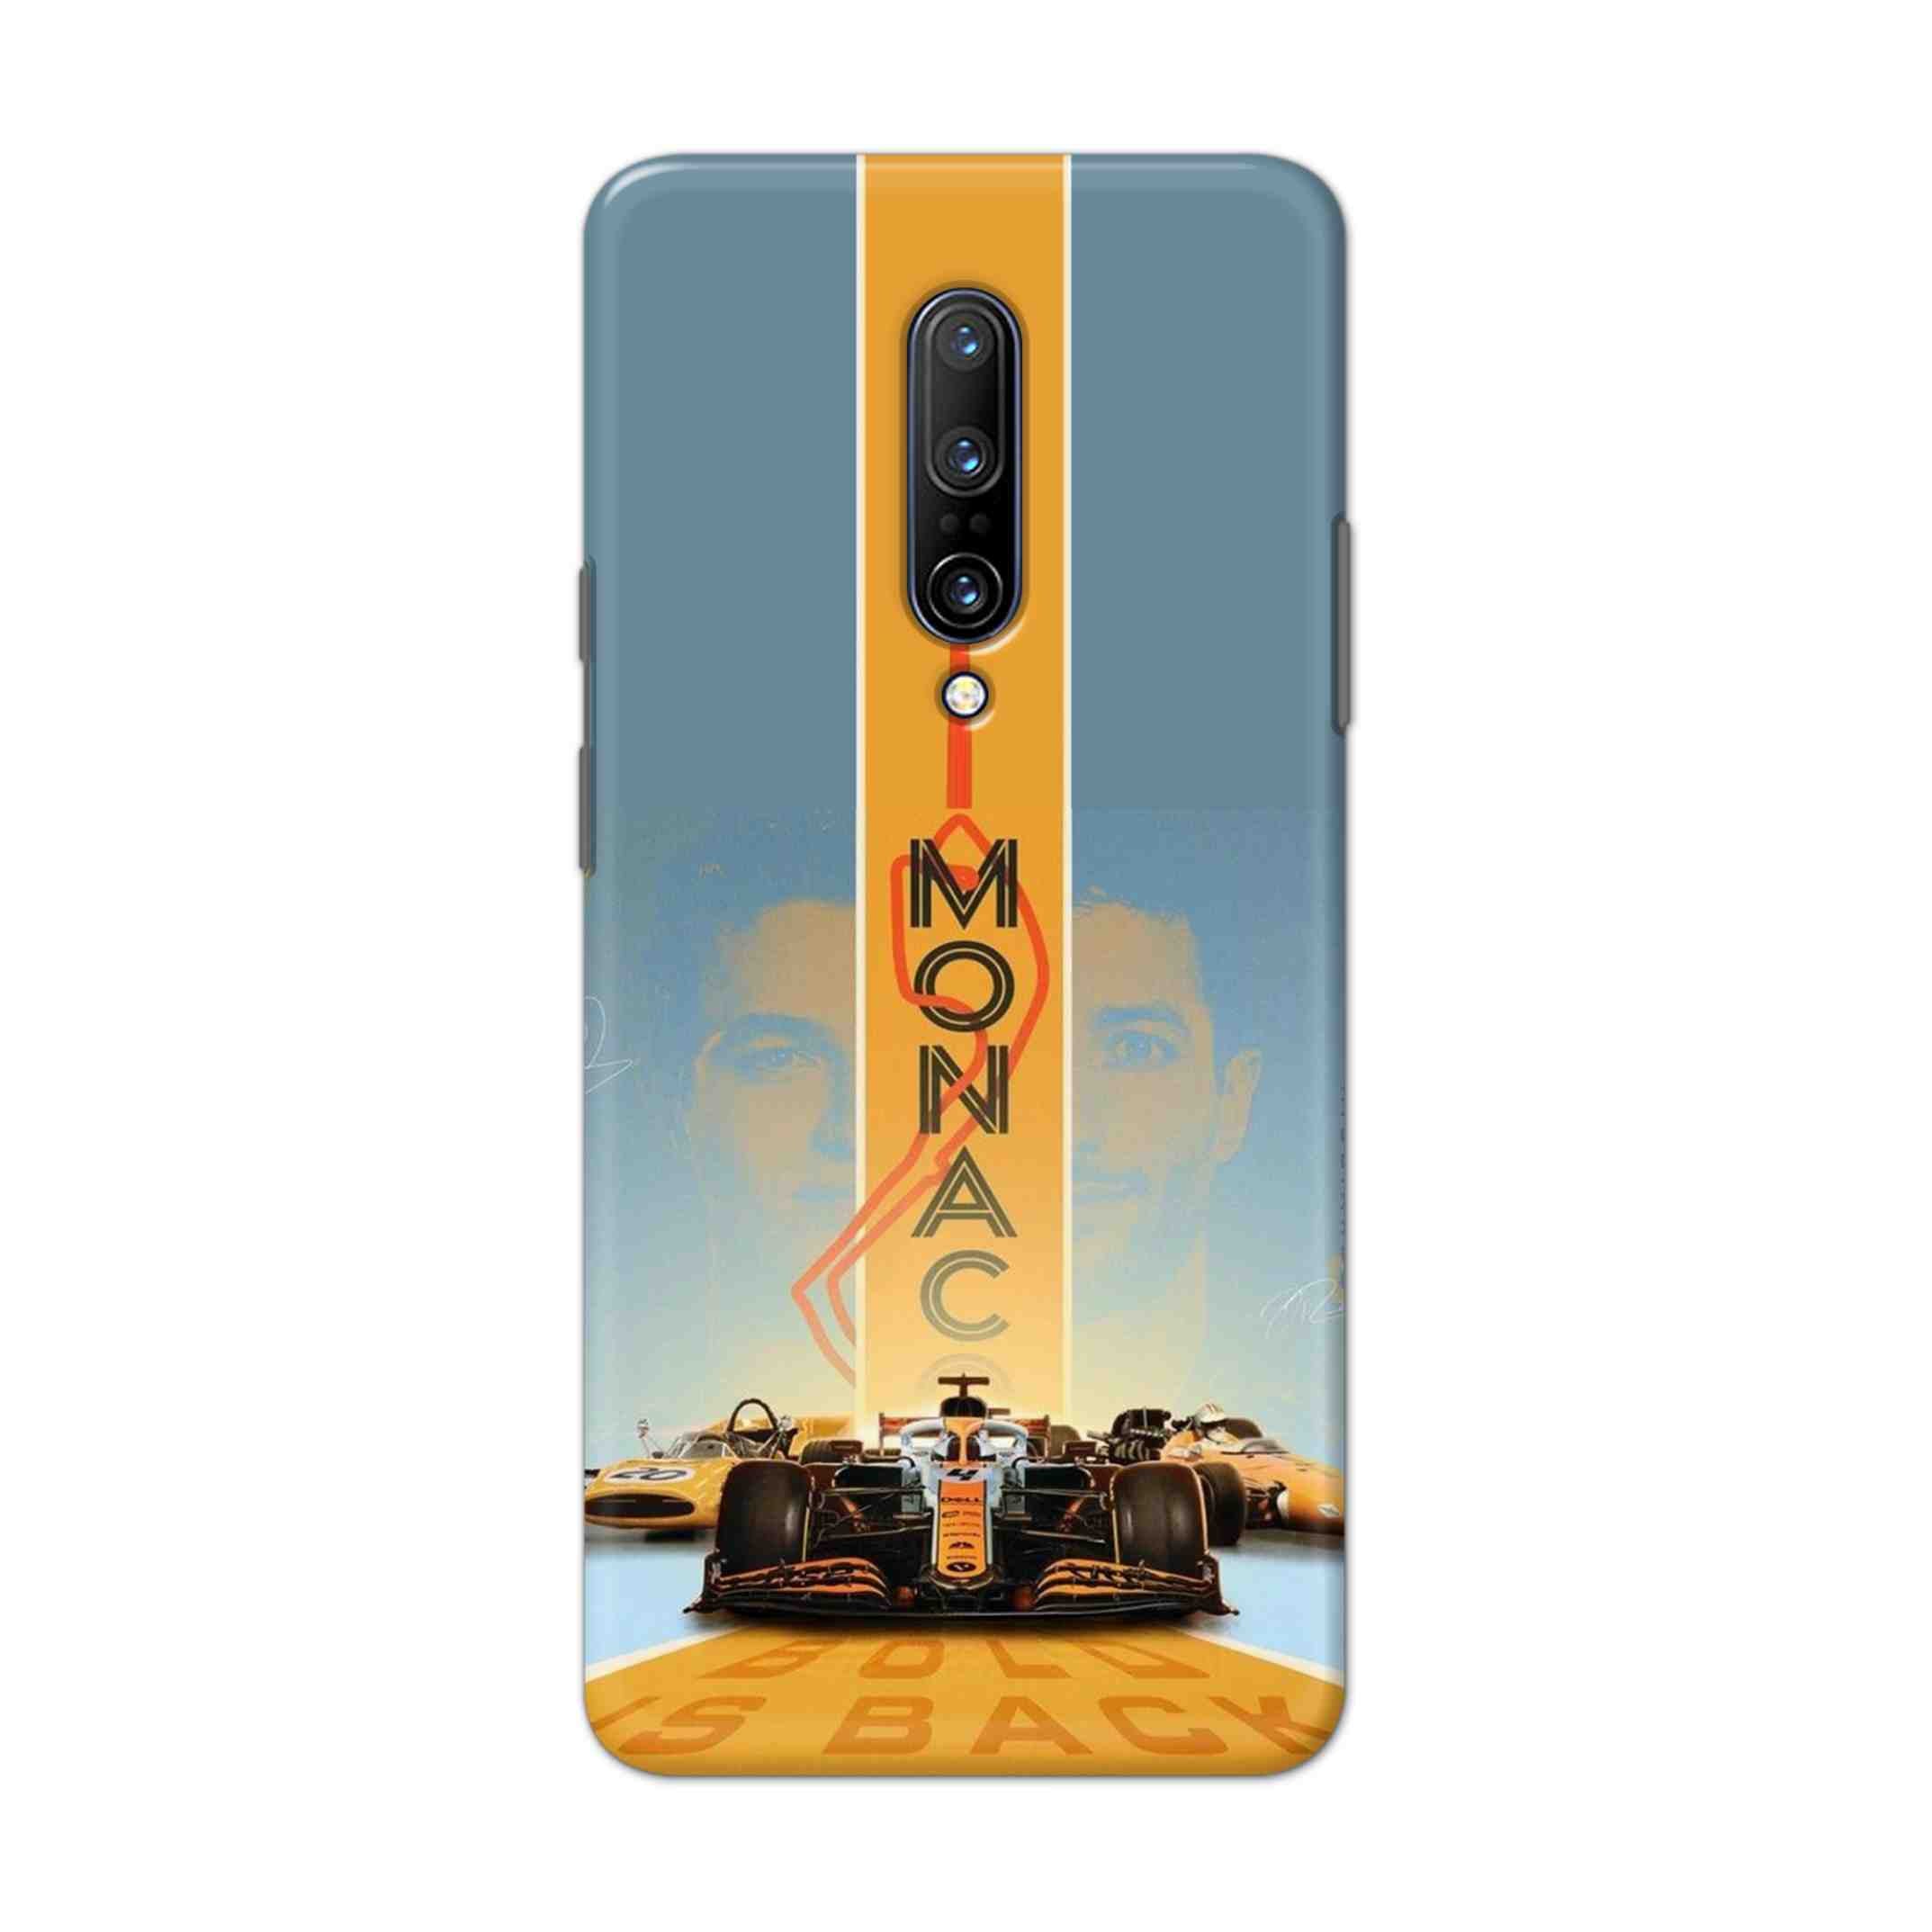 Buy Monac Formula Hard Back Mobile Phone Case Cover For OnePlus 7 Pro Online